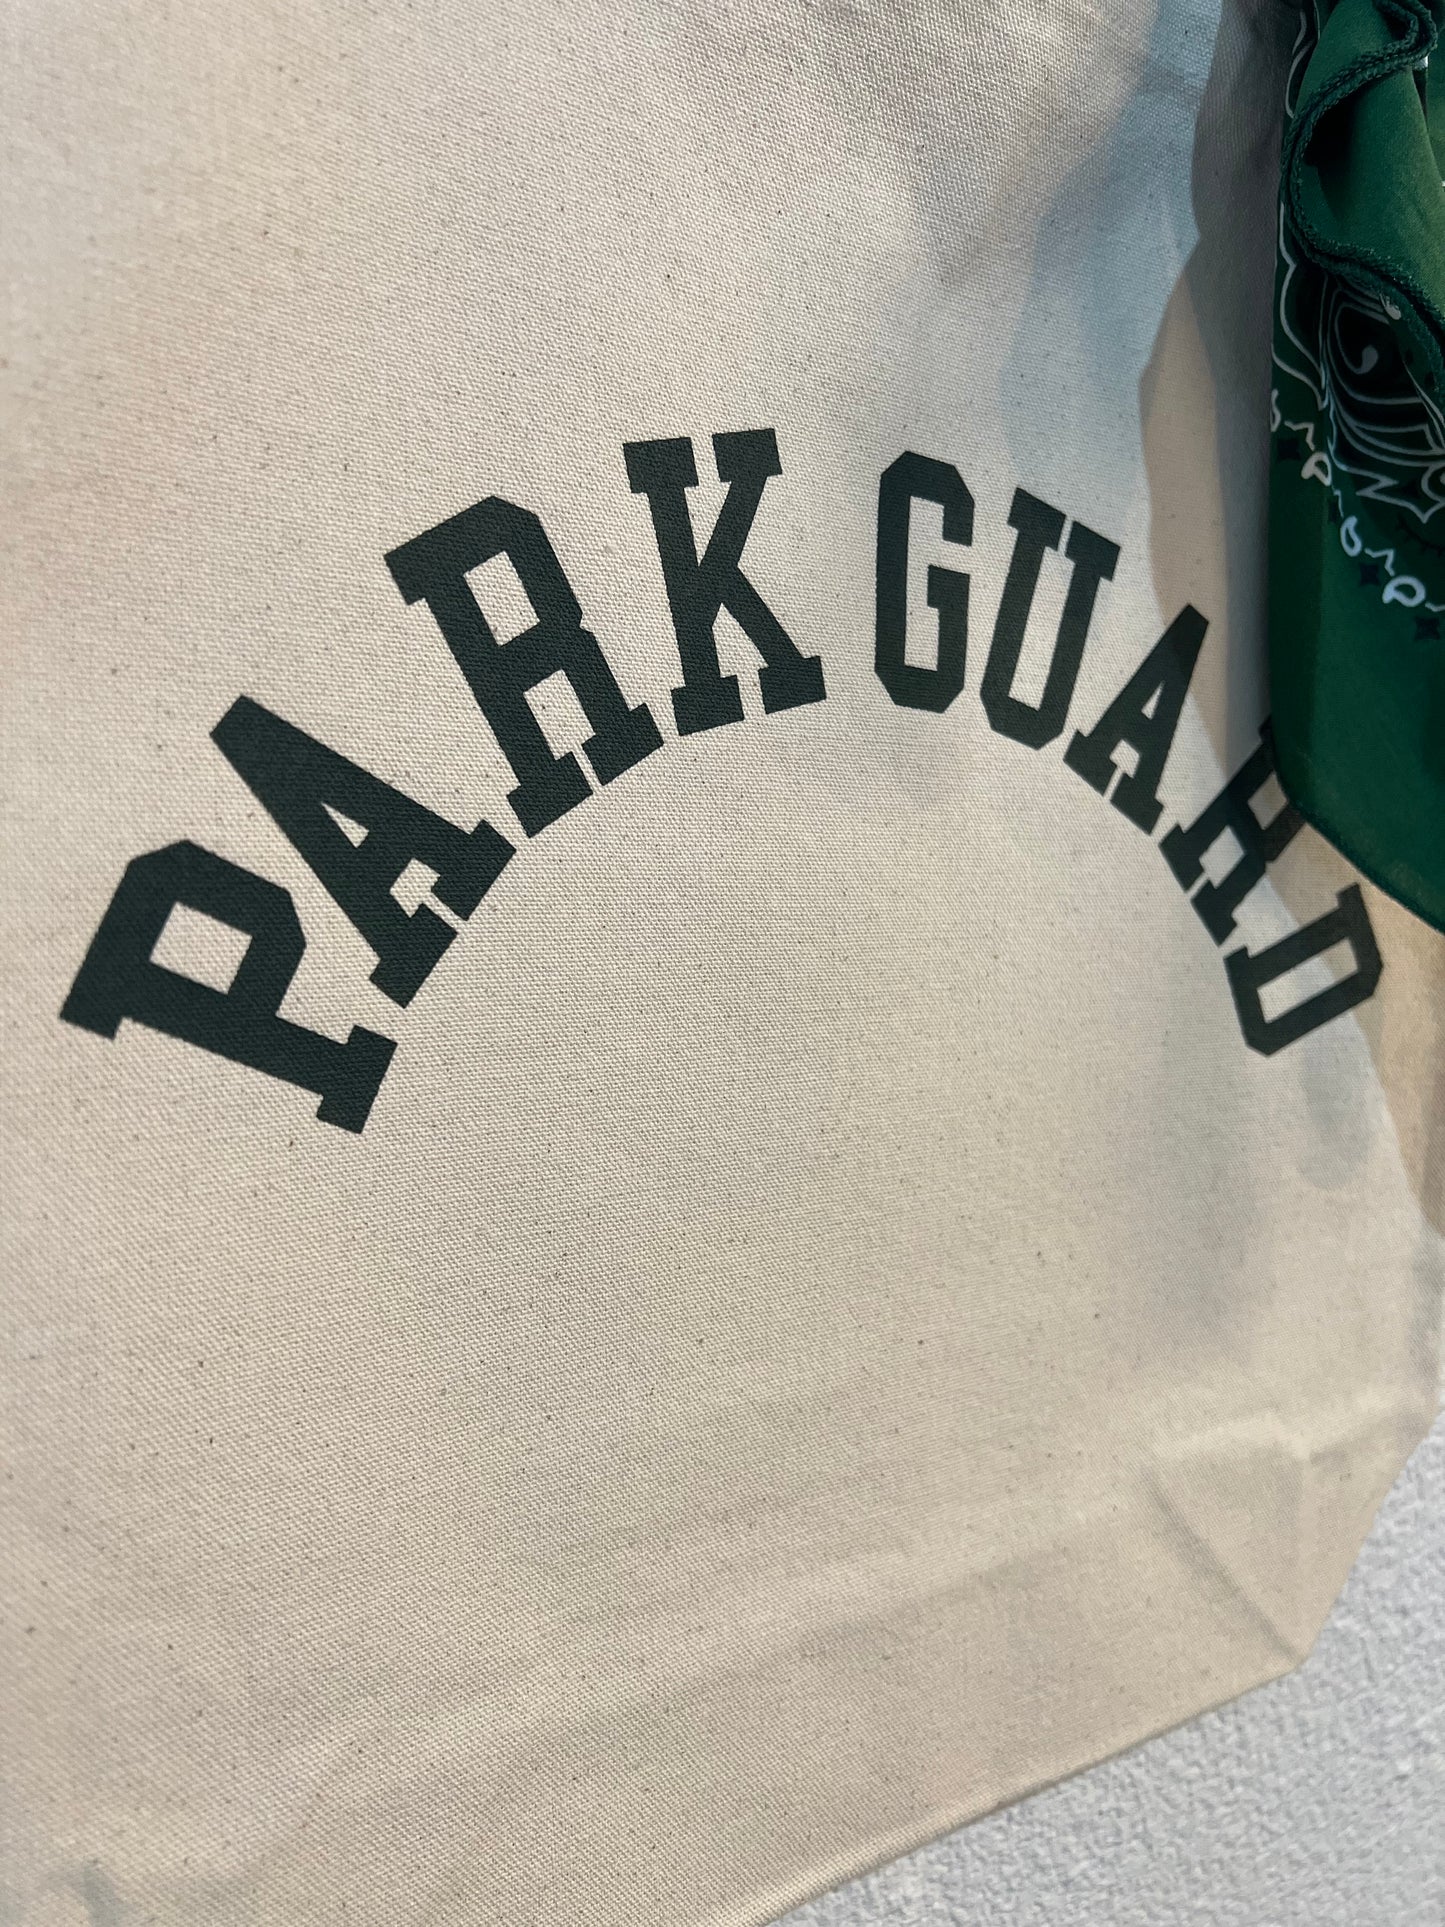 Tote Bag "Park Gaurd"